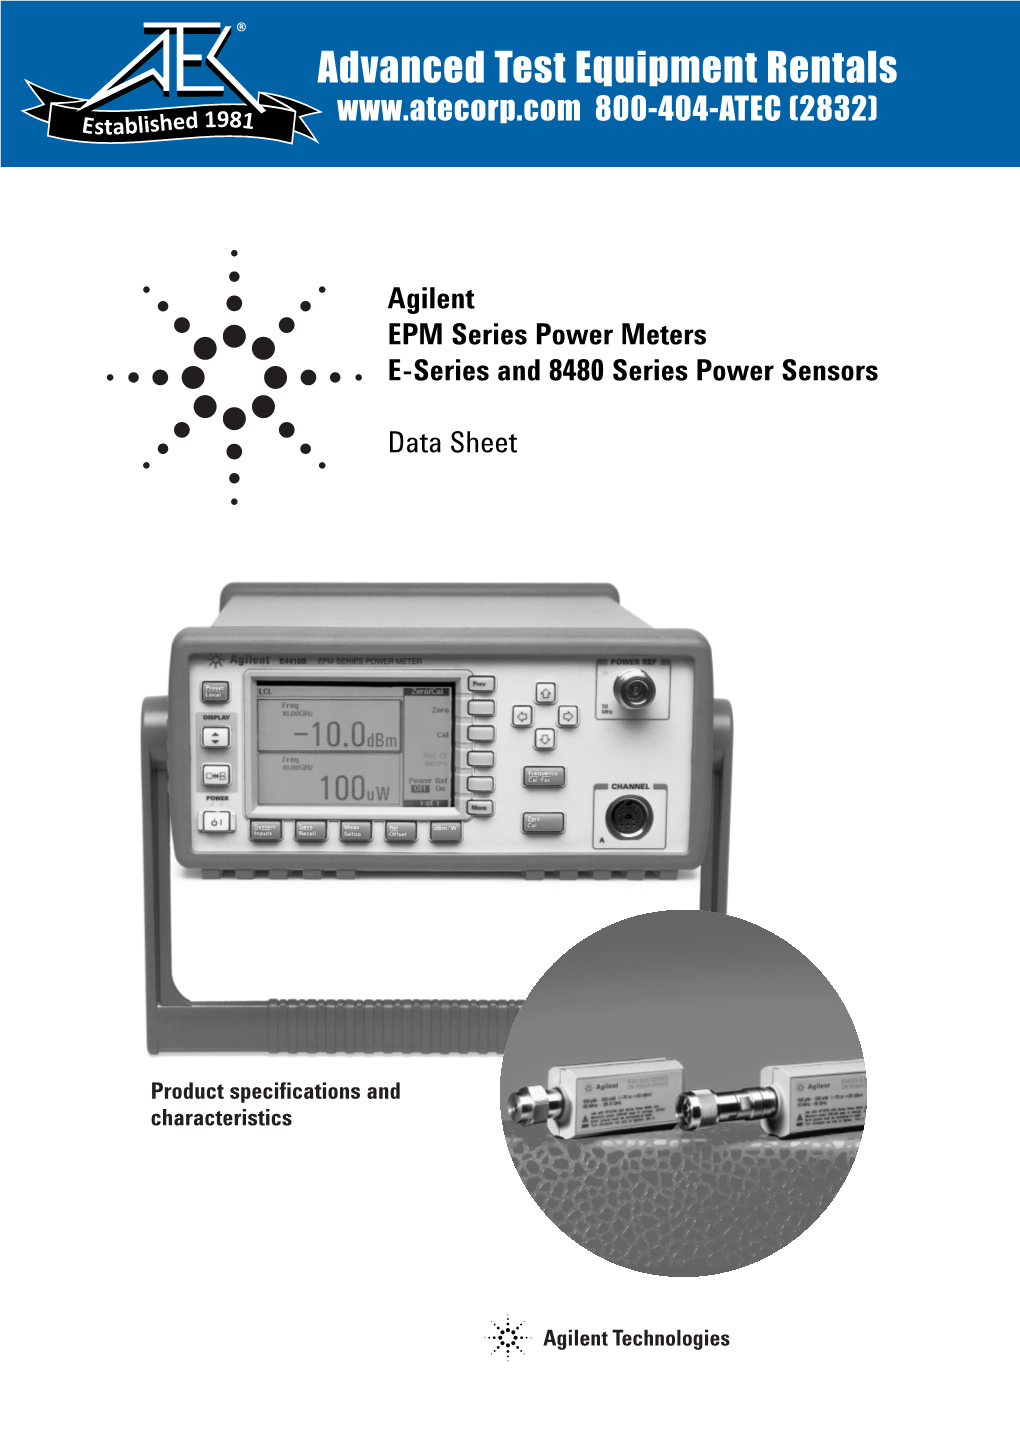 Agilent EPM Series Power Meters E-Series and 8480 Series Power Sensors